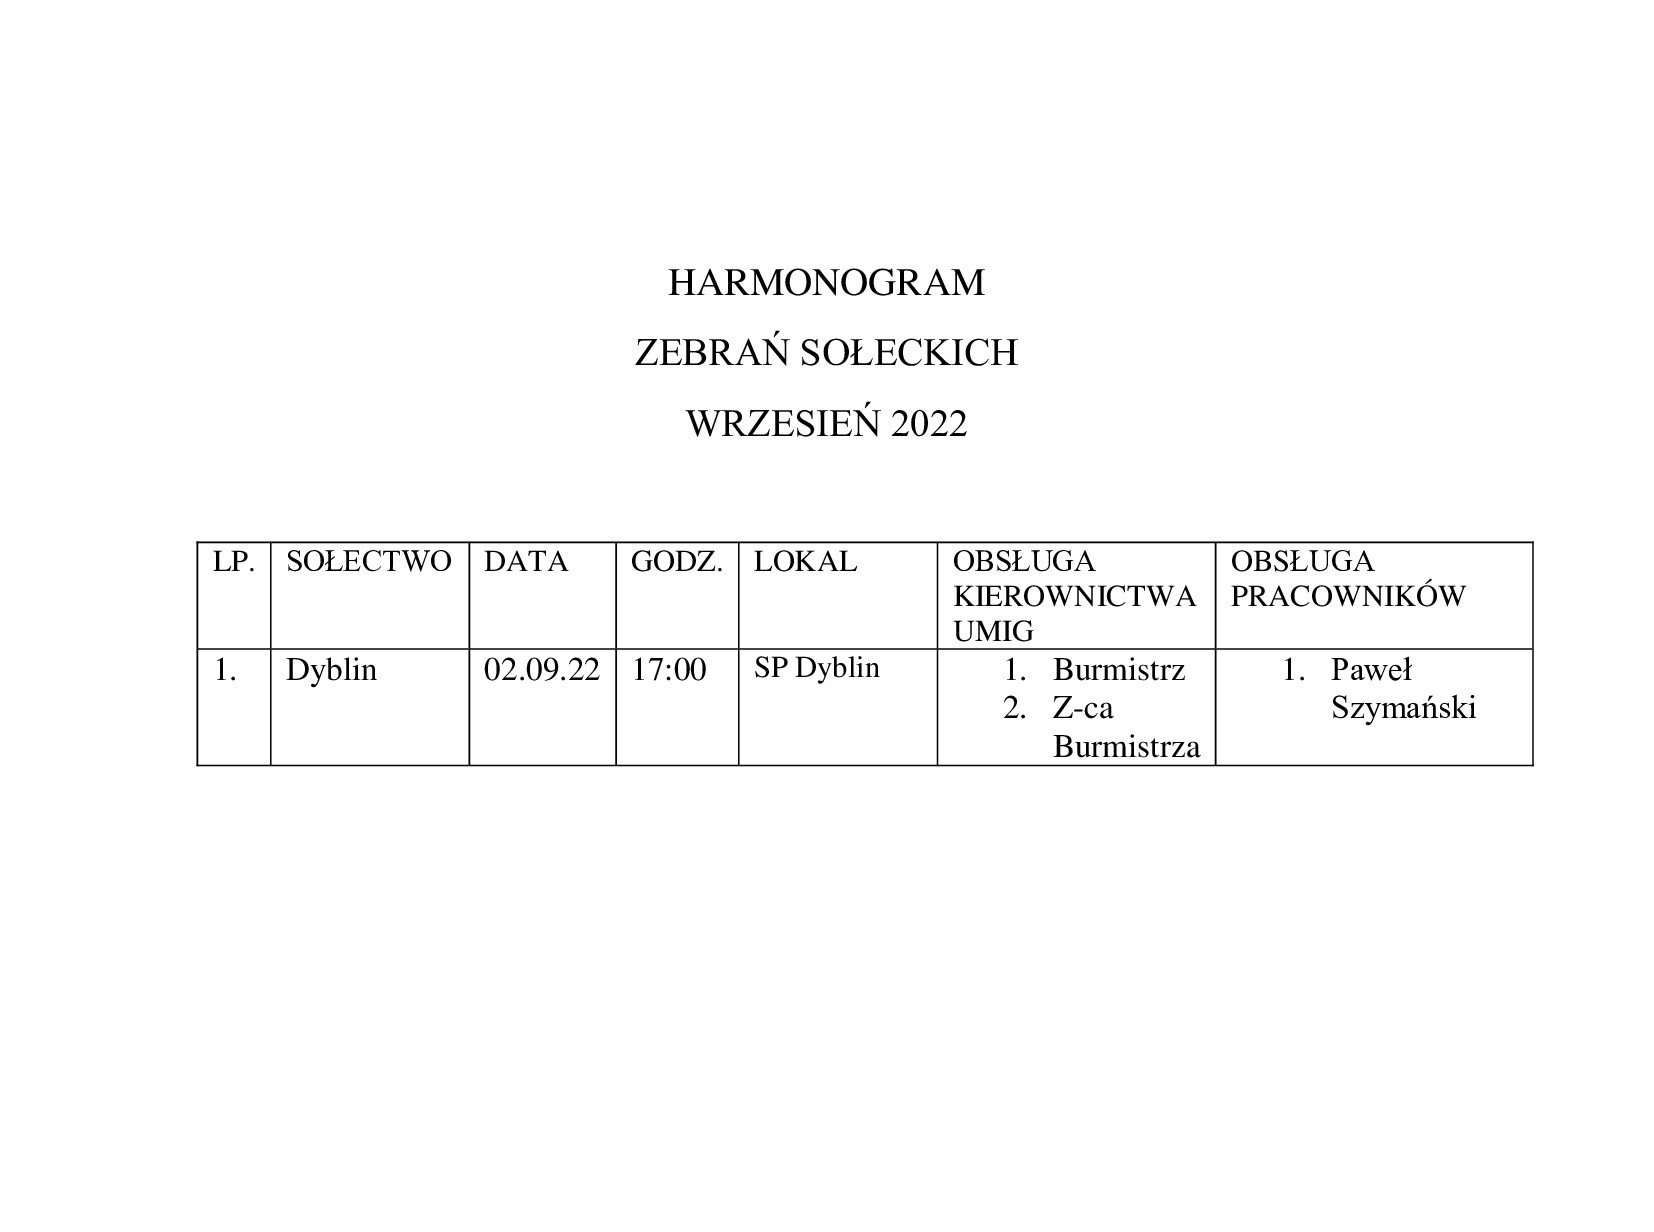 HARMONOGRAM WRZESIEŃ 2022 C